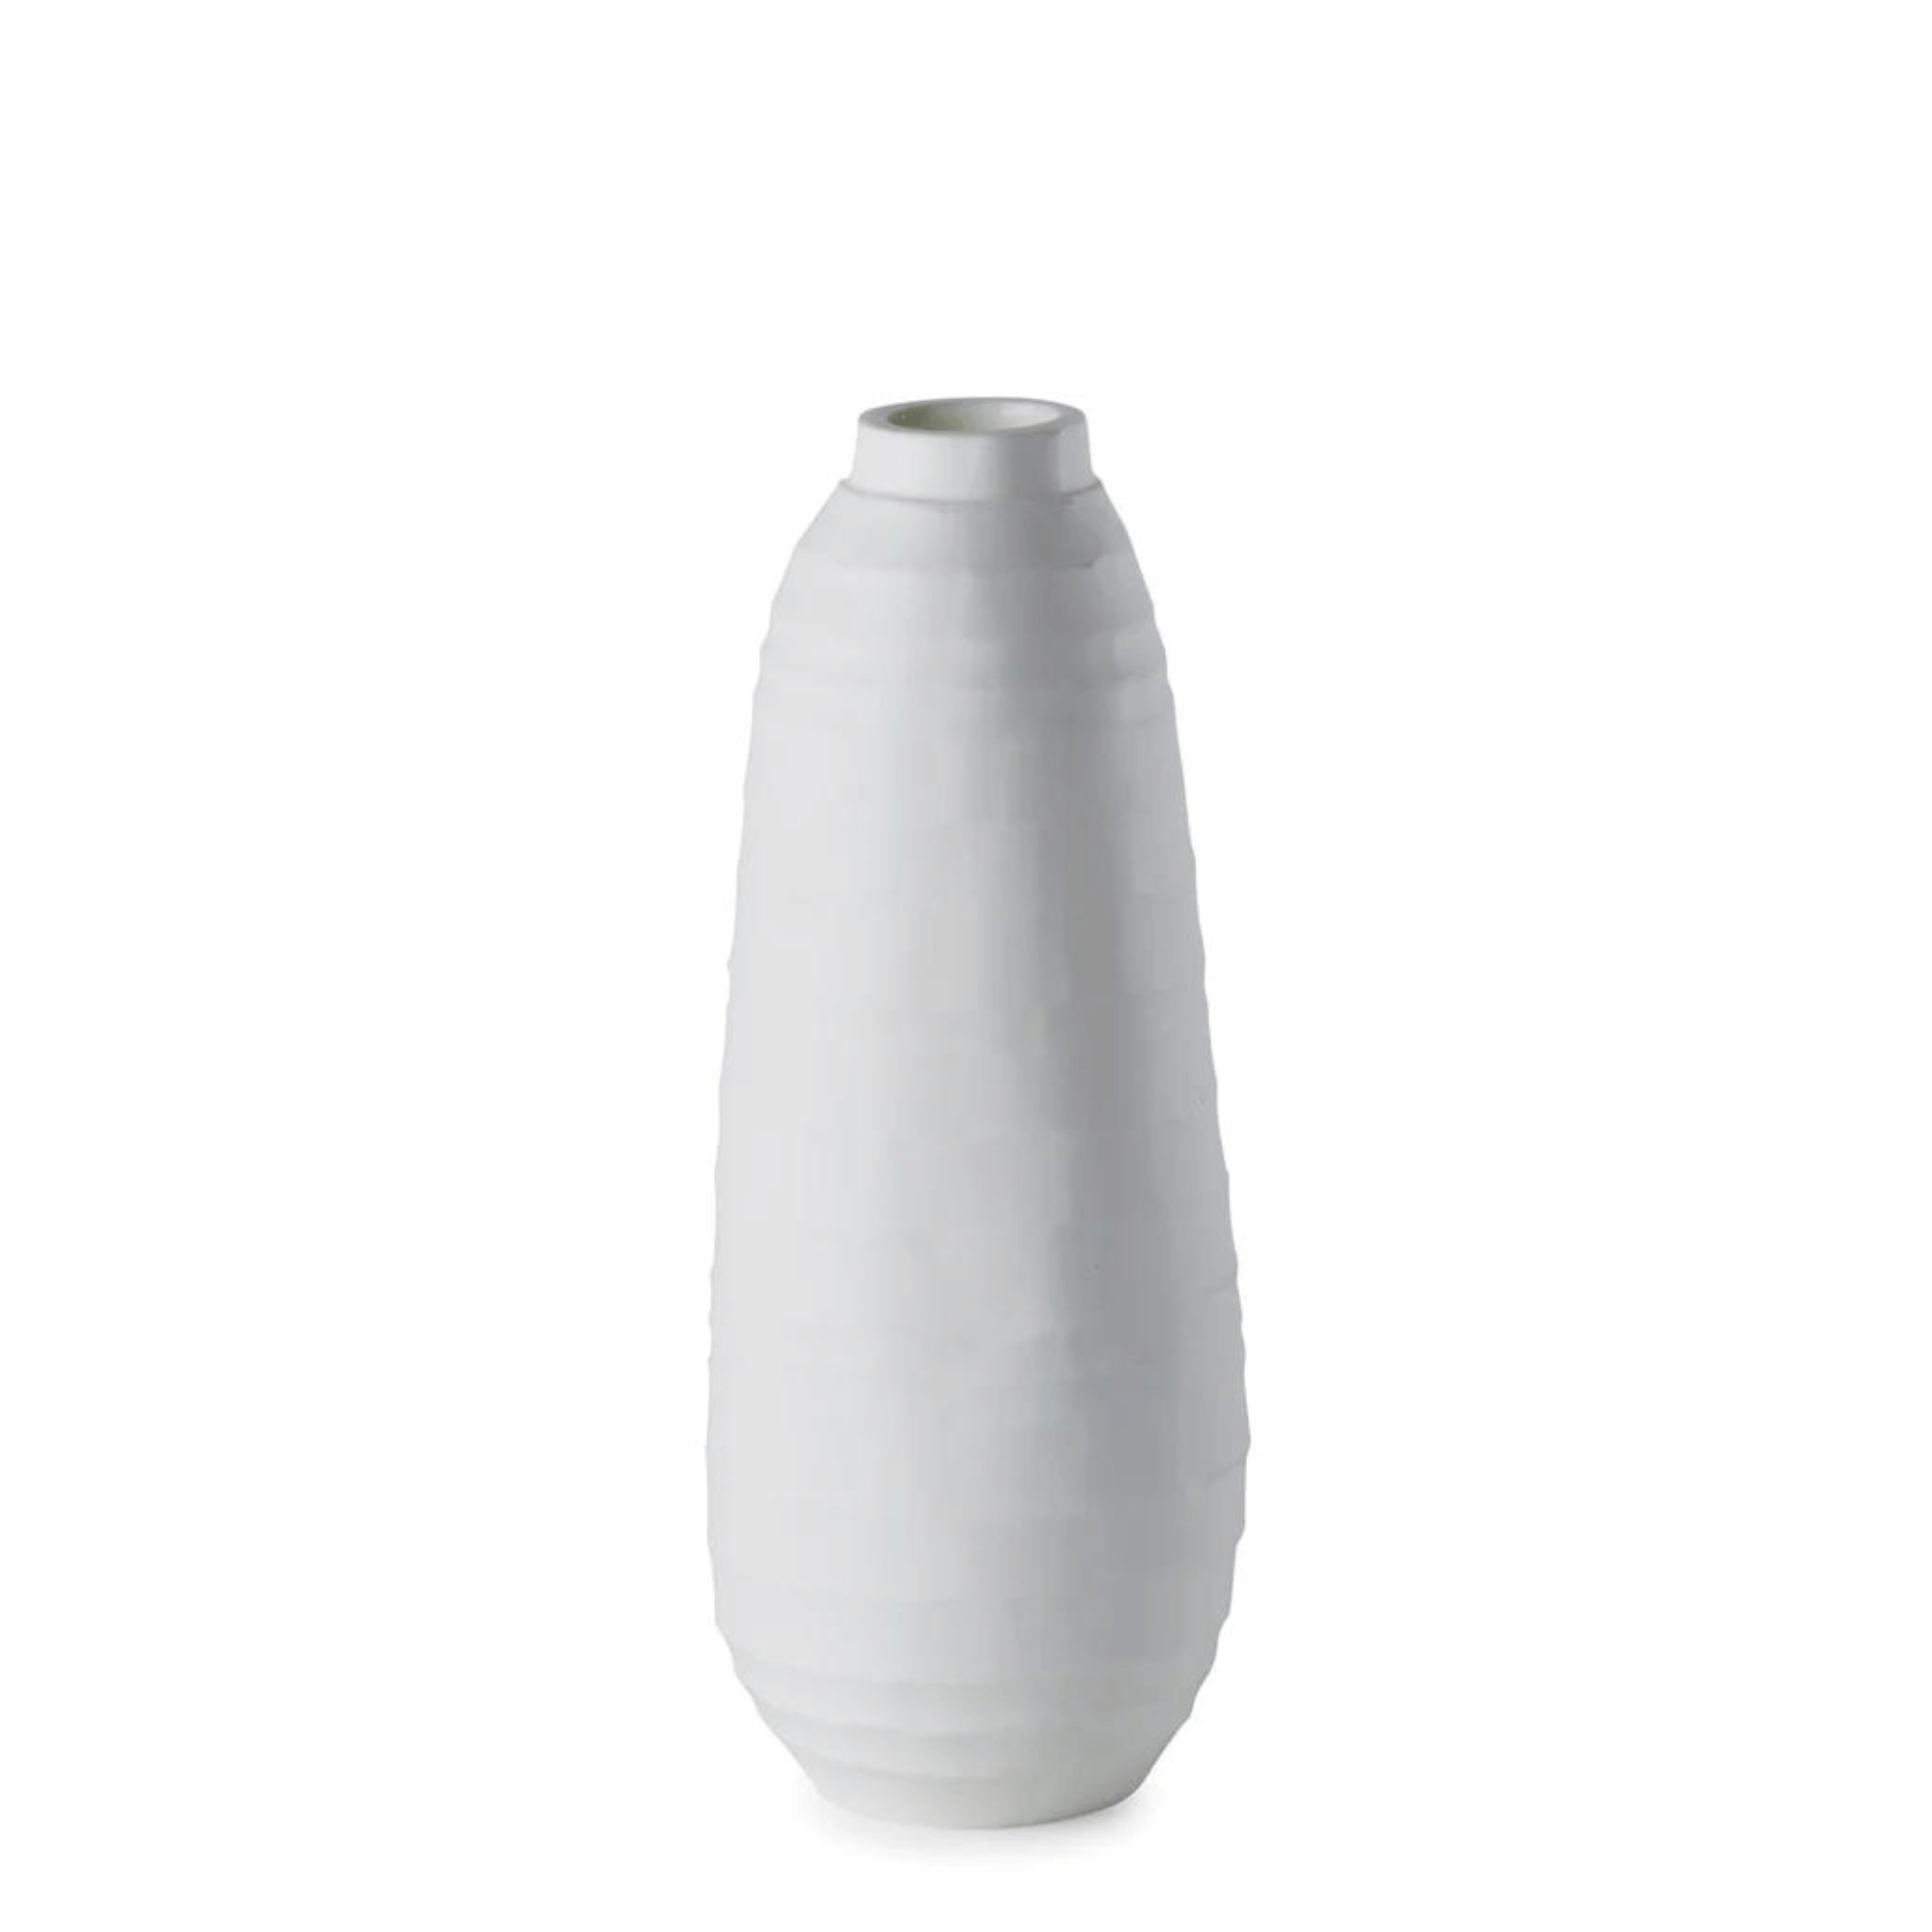 GUAXS white tall vase